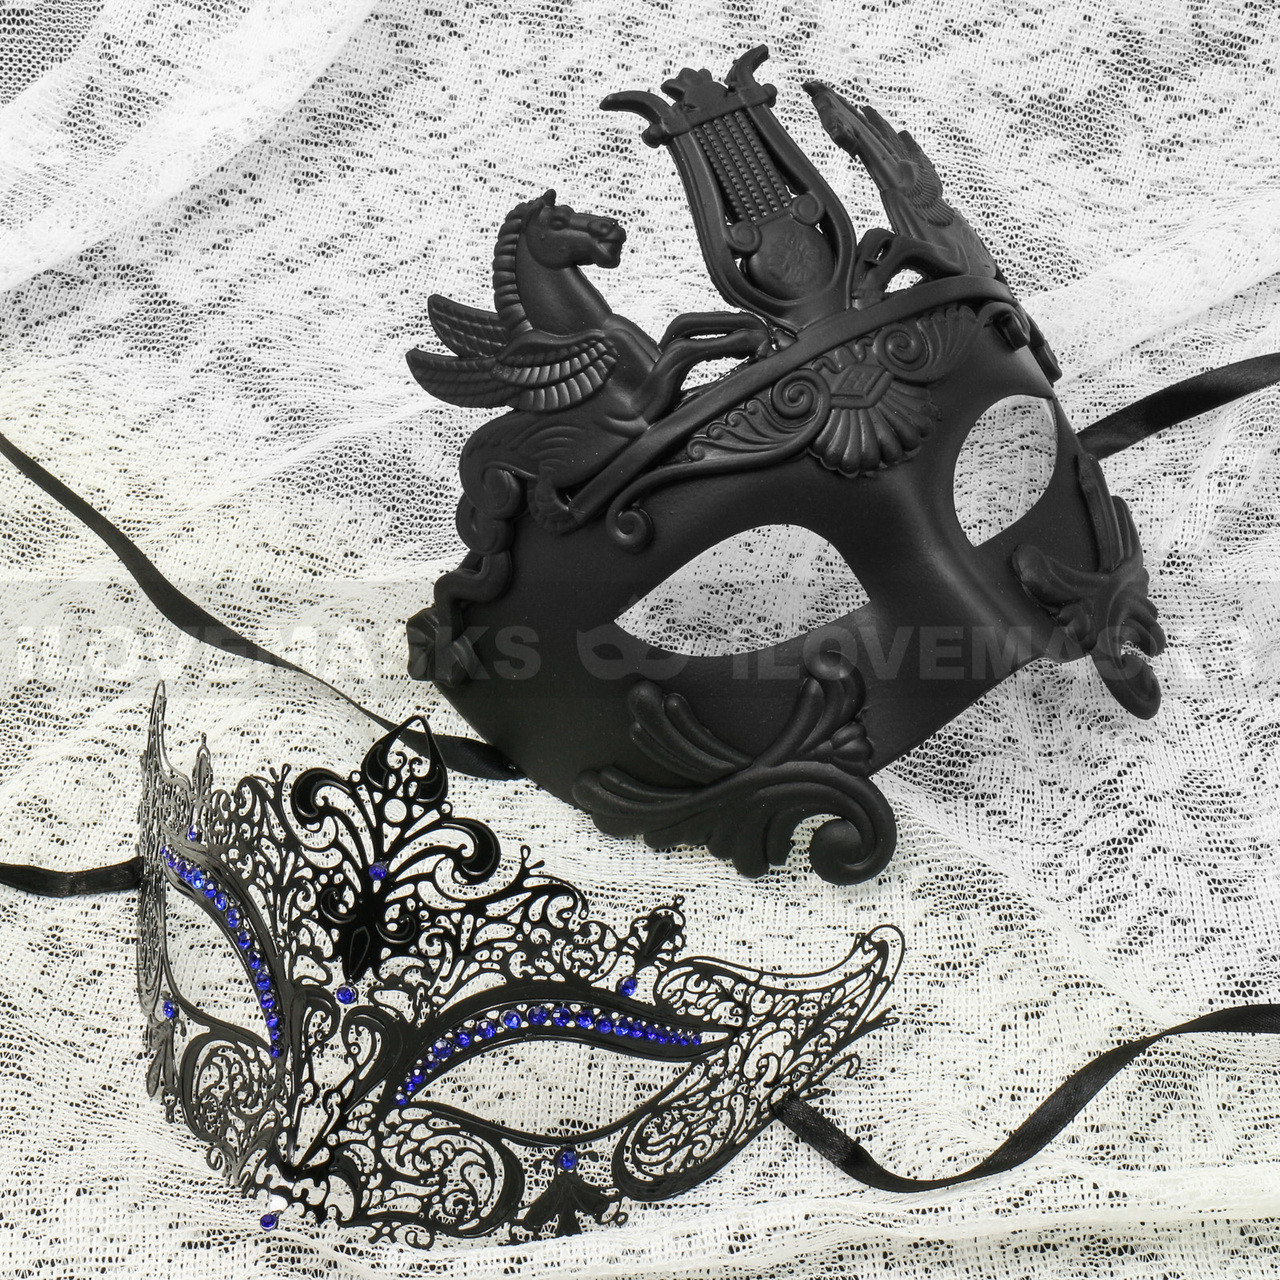 blue and black masquerade masks